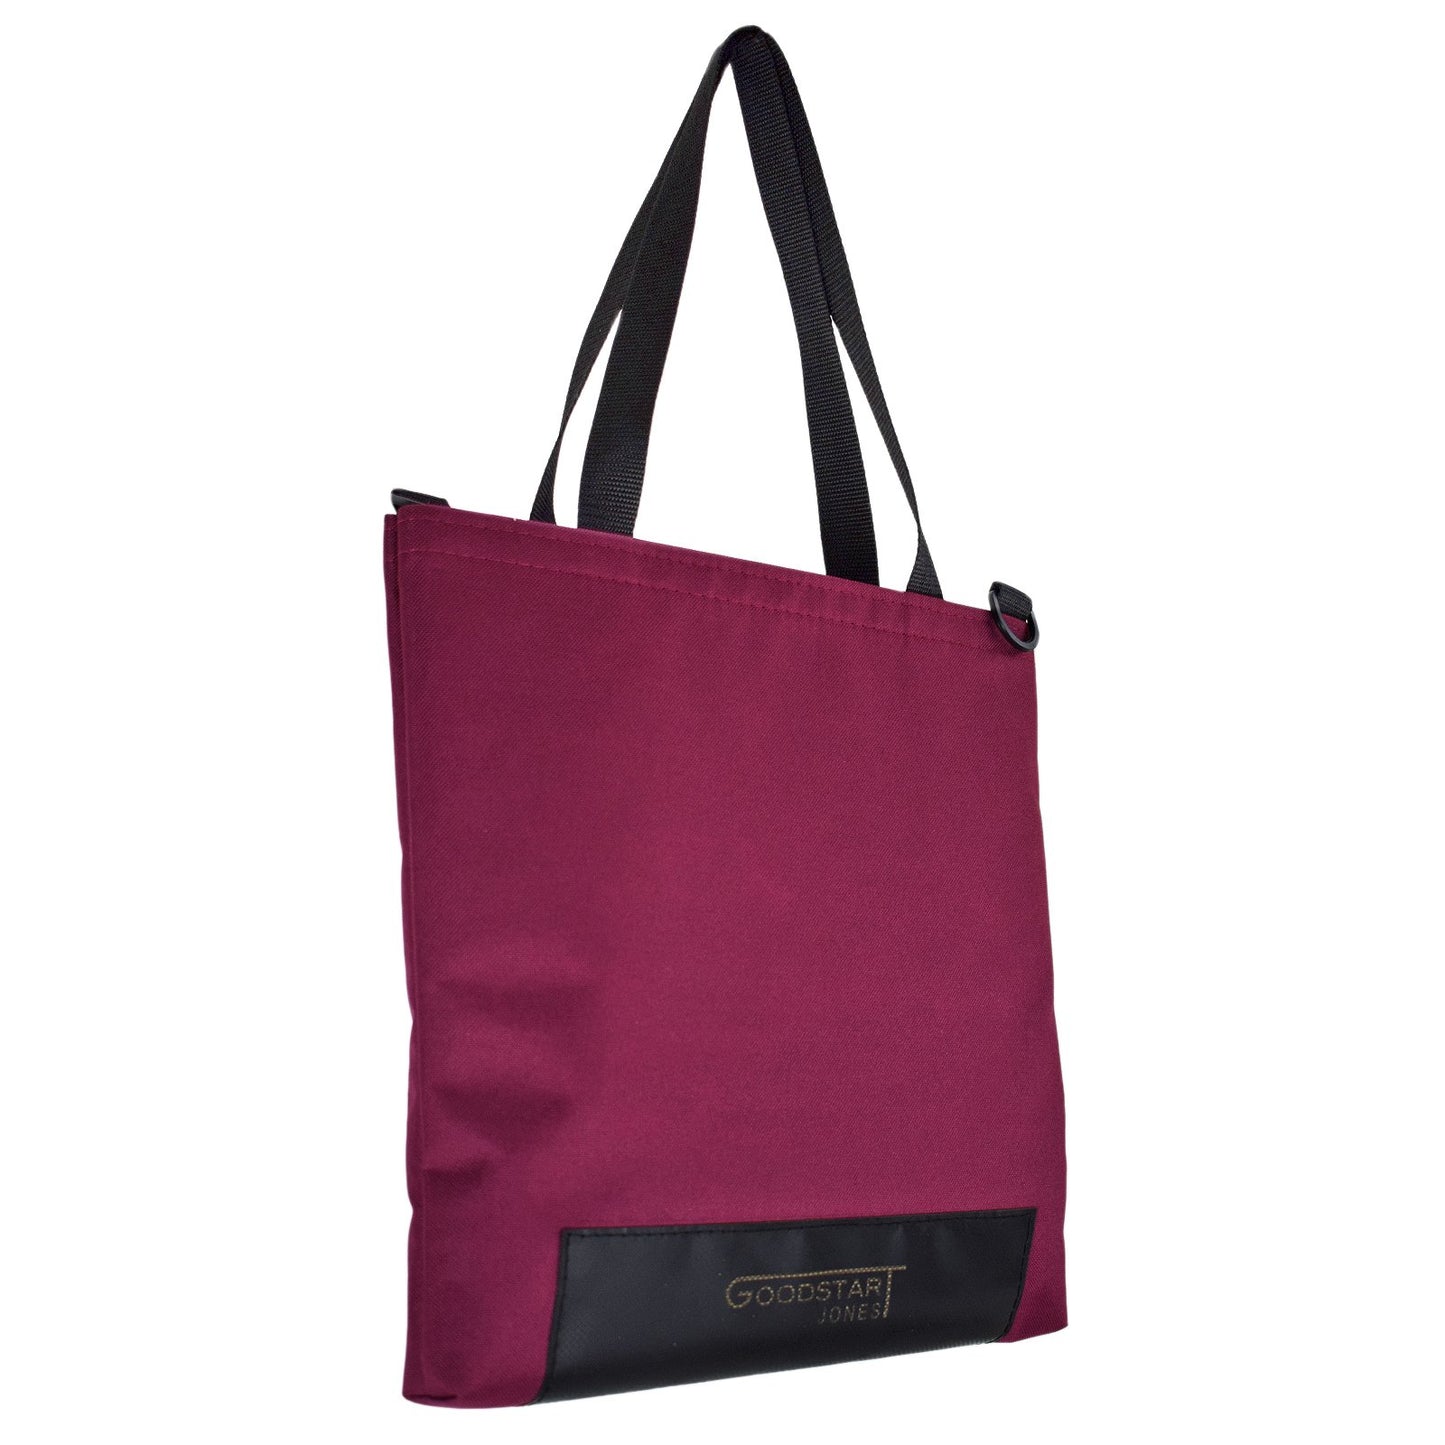 best Tote Bag in burgundy red by Goodstart Jones